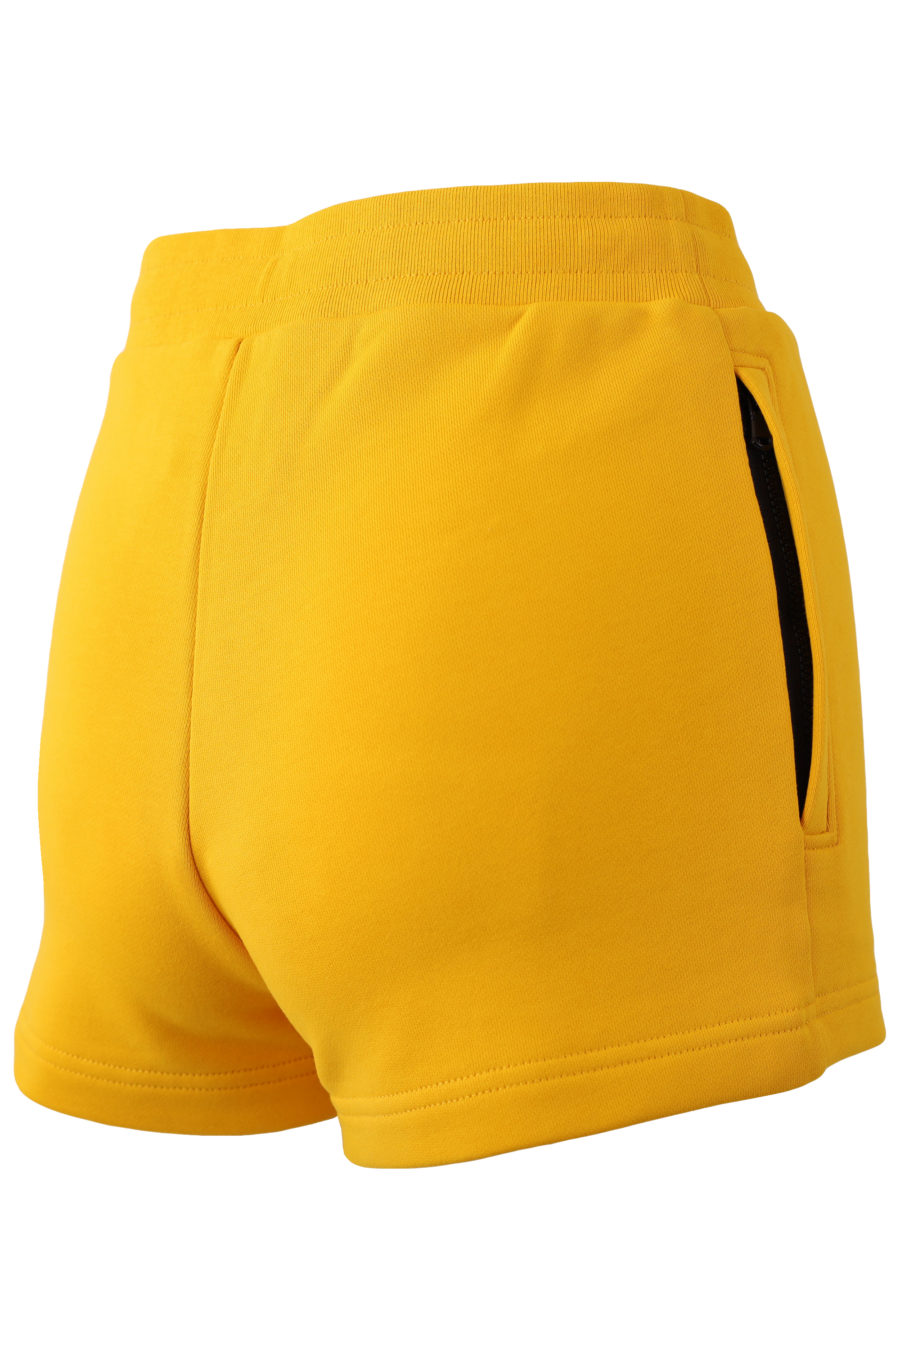 Orangefarbene Shorts mit schwarzem Logo - 197cc9d9209dc3a711e07472aa192fee96c1da6f